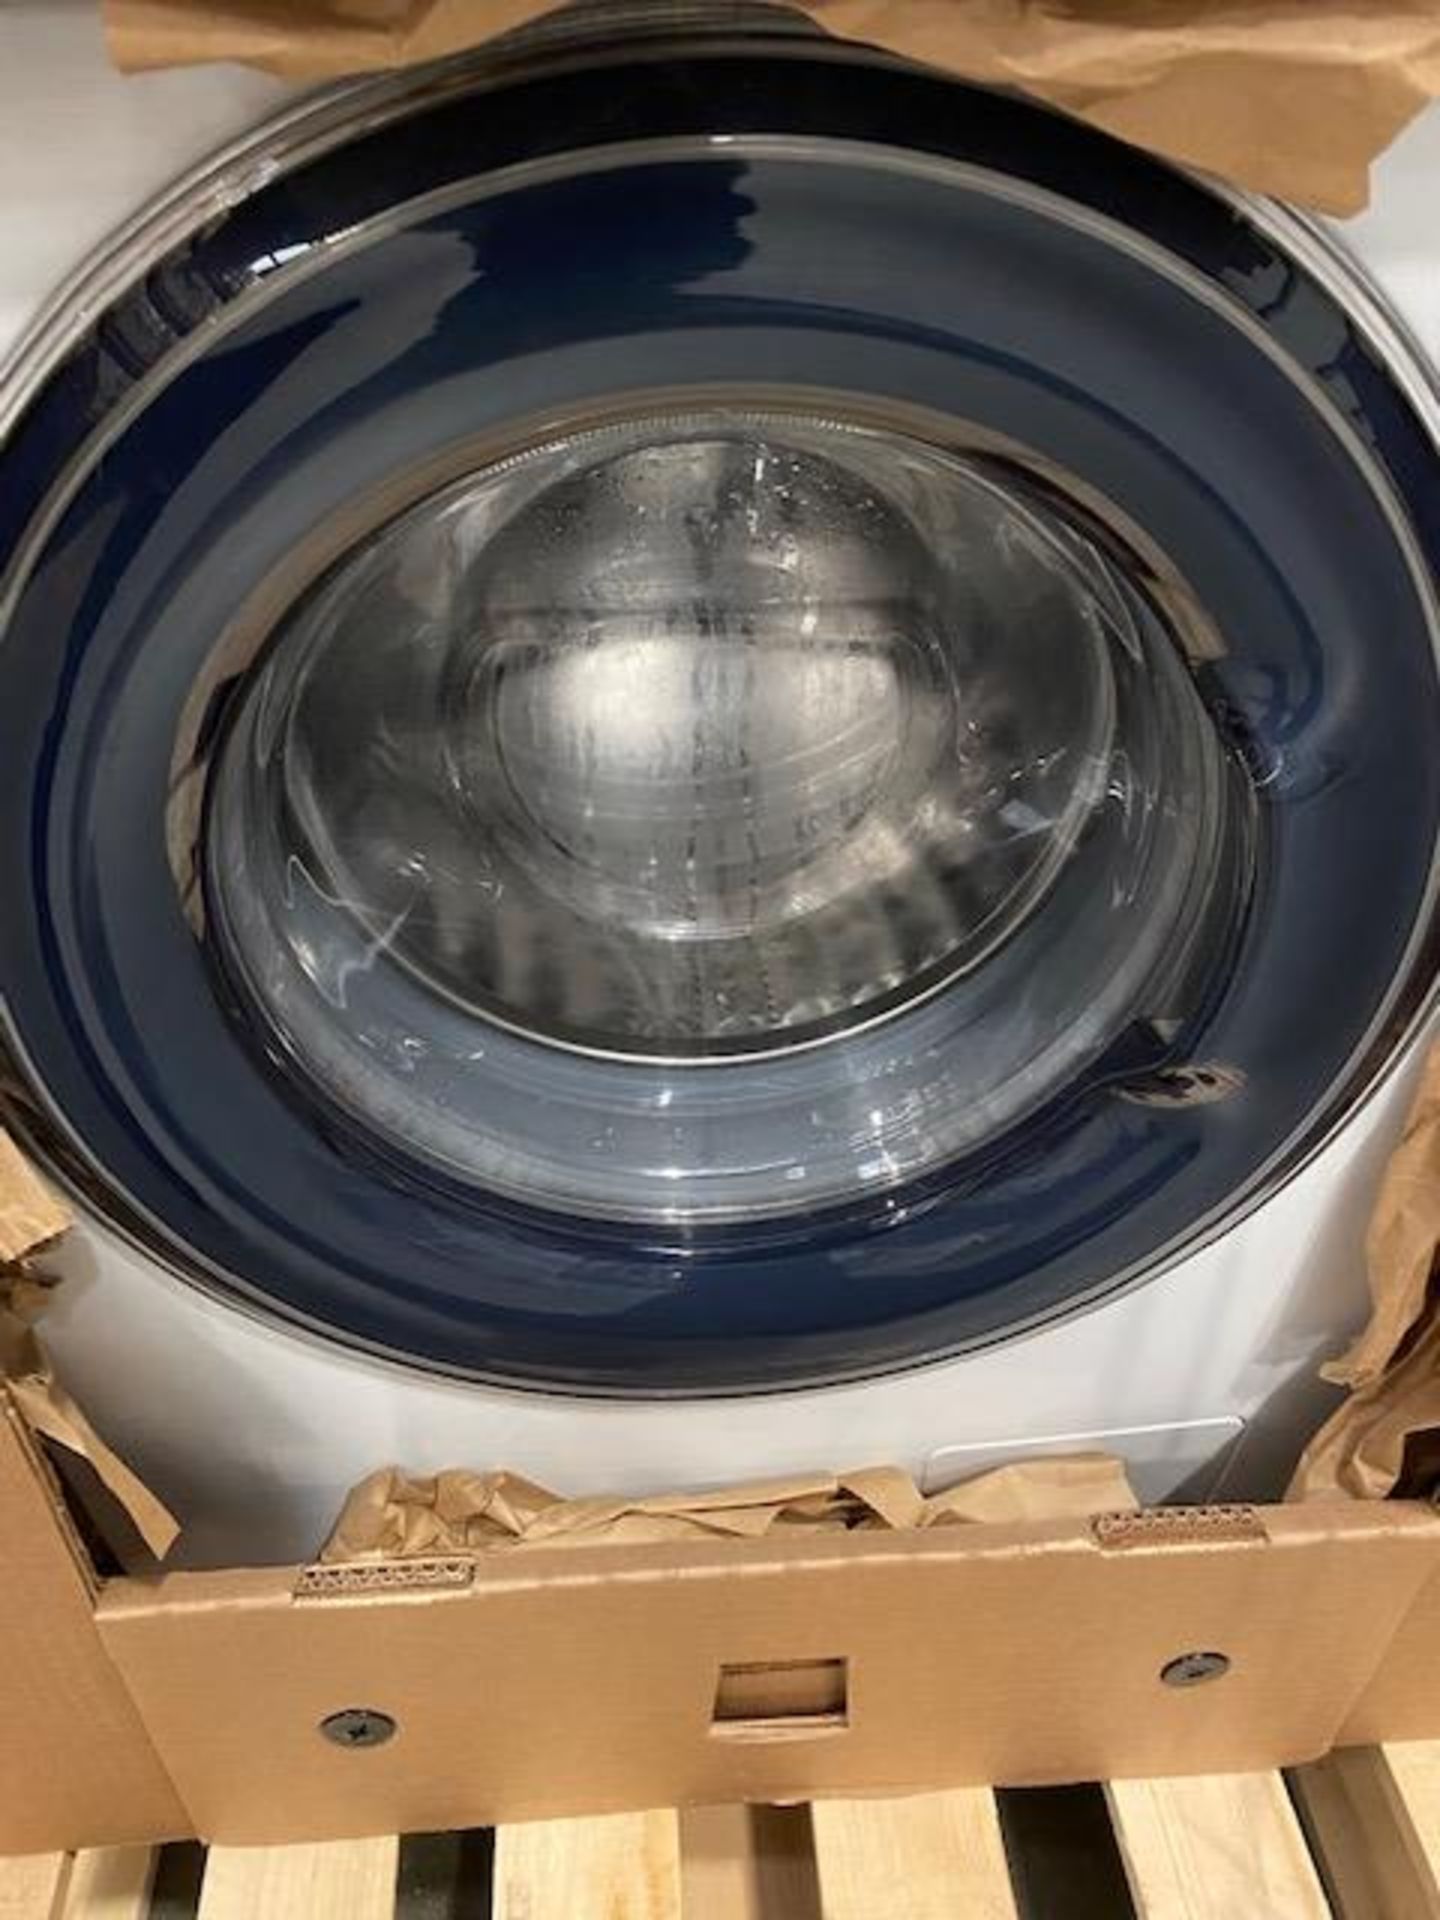 Pallet of 1 Samsung Premium Washing machine. Latest selling price £339* - Image 5 of 8